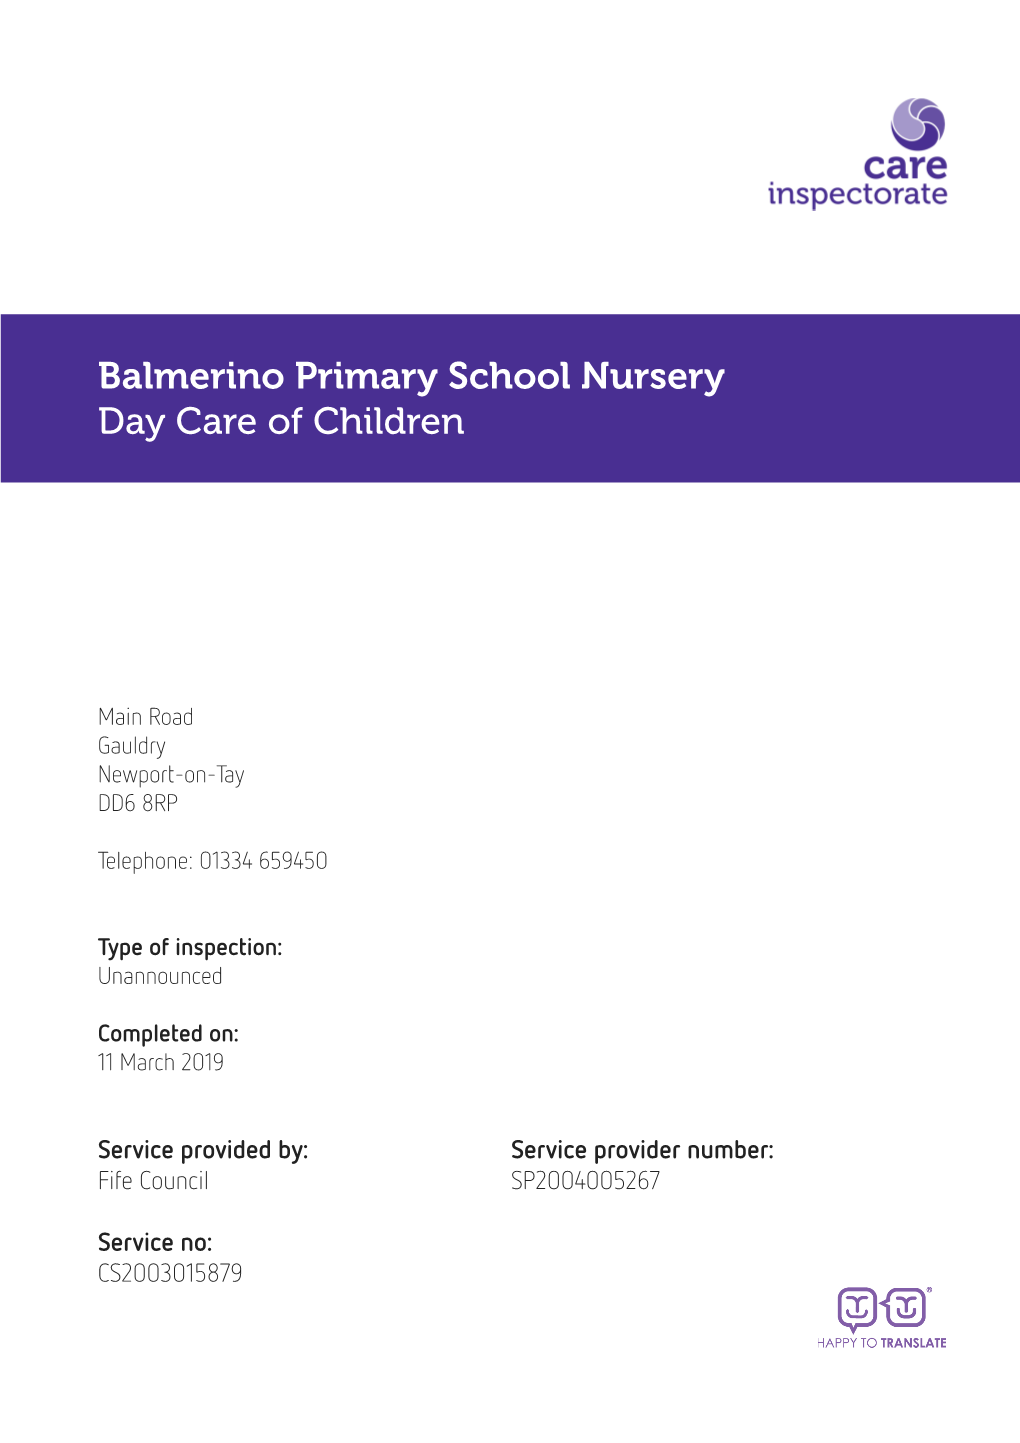 Balmerino Primary School Nursery Day Care of Children